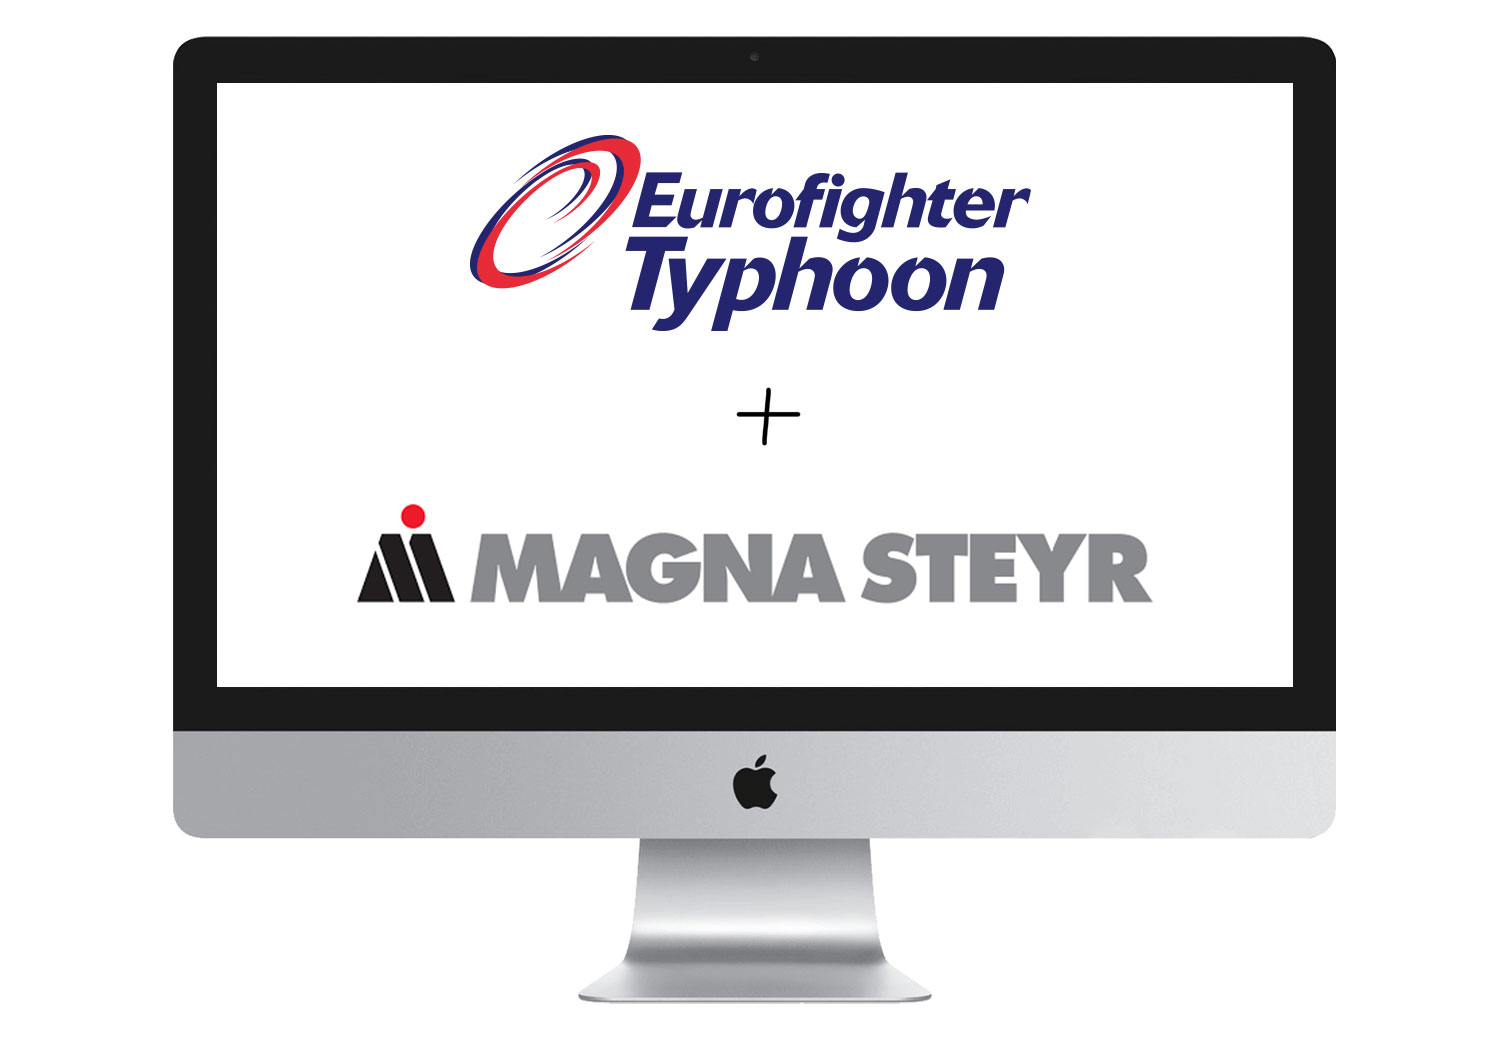 EIDEX Eurofighter Typhoon Magna Steyr Fullservice